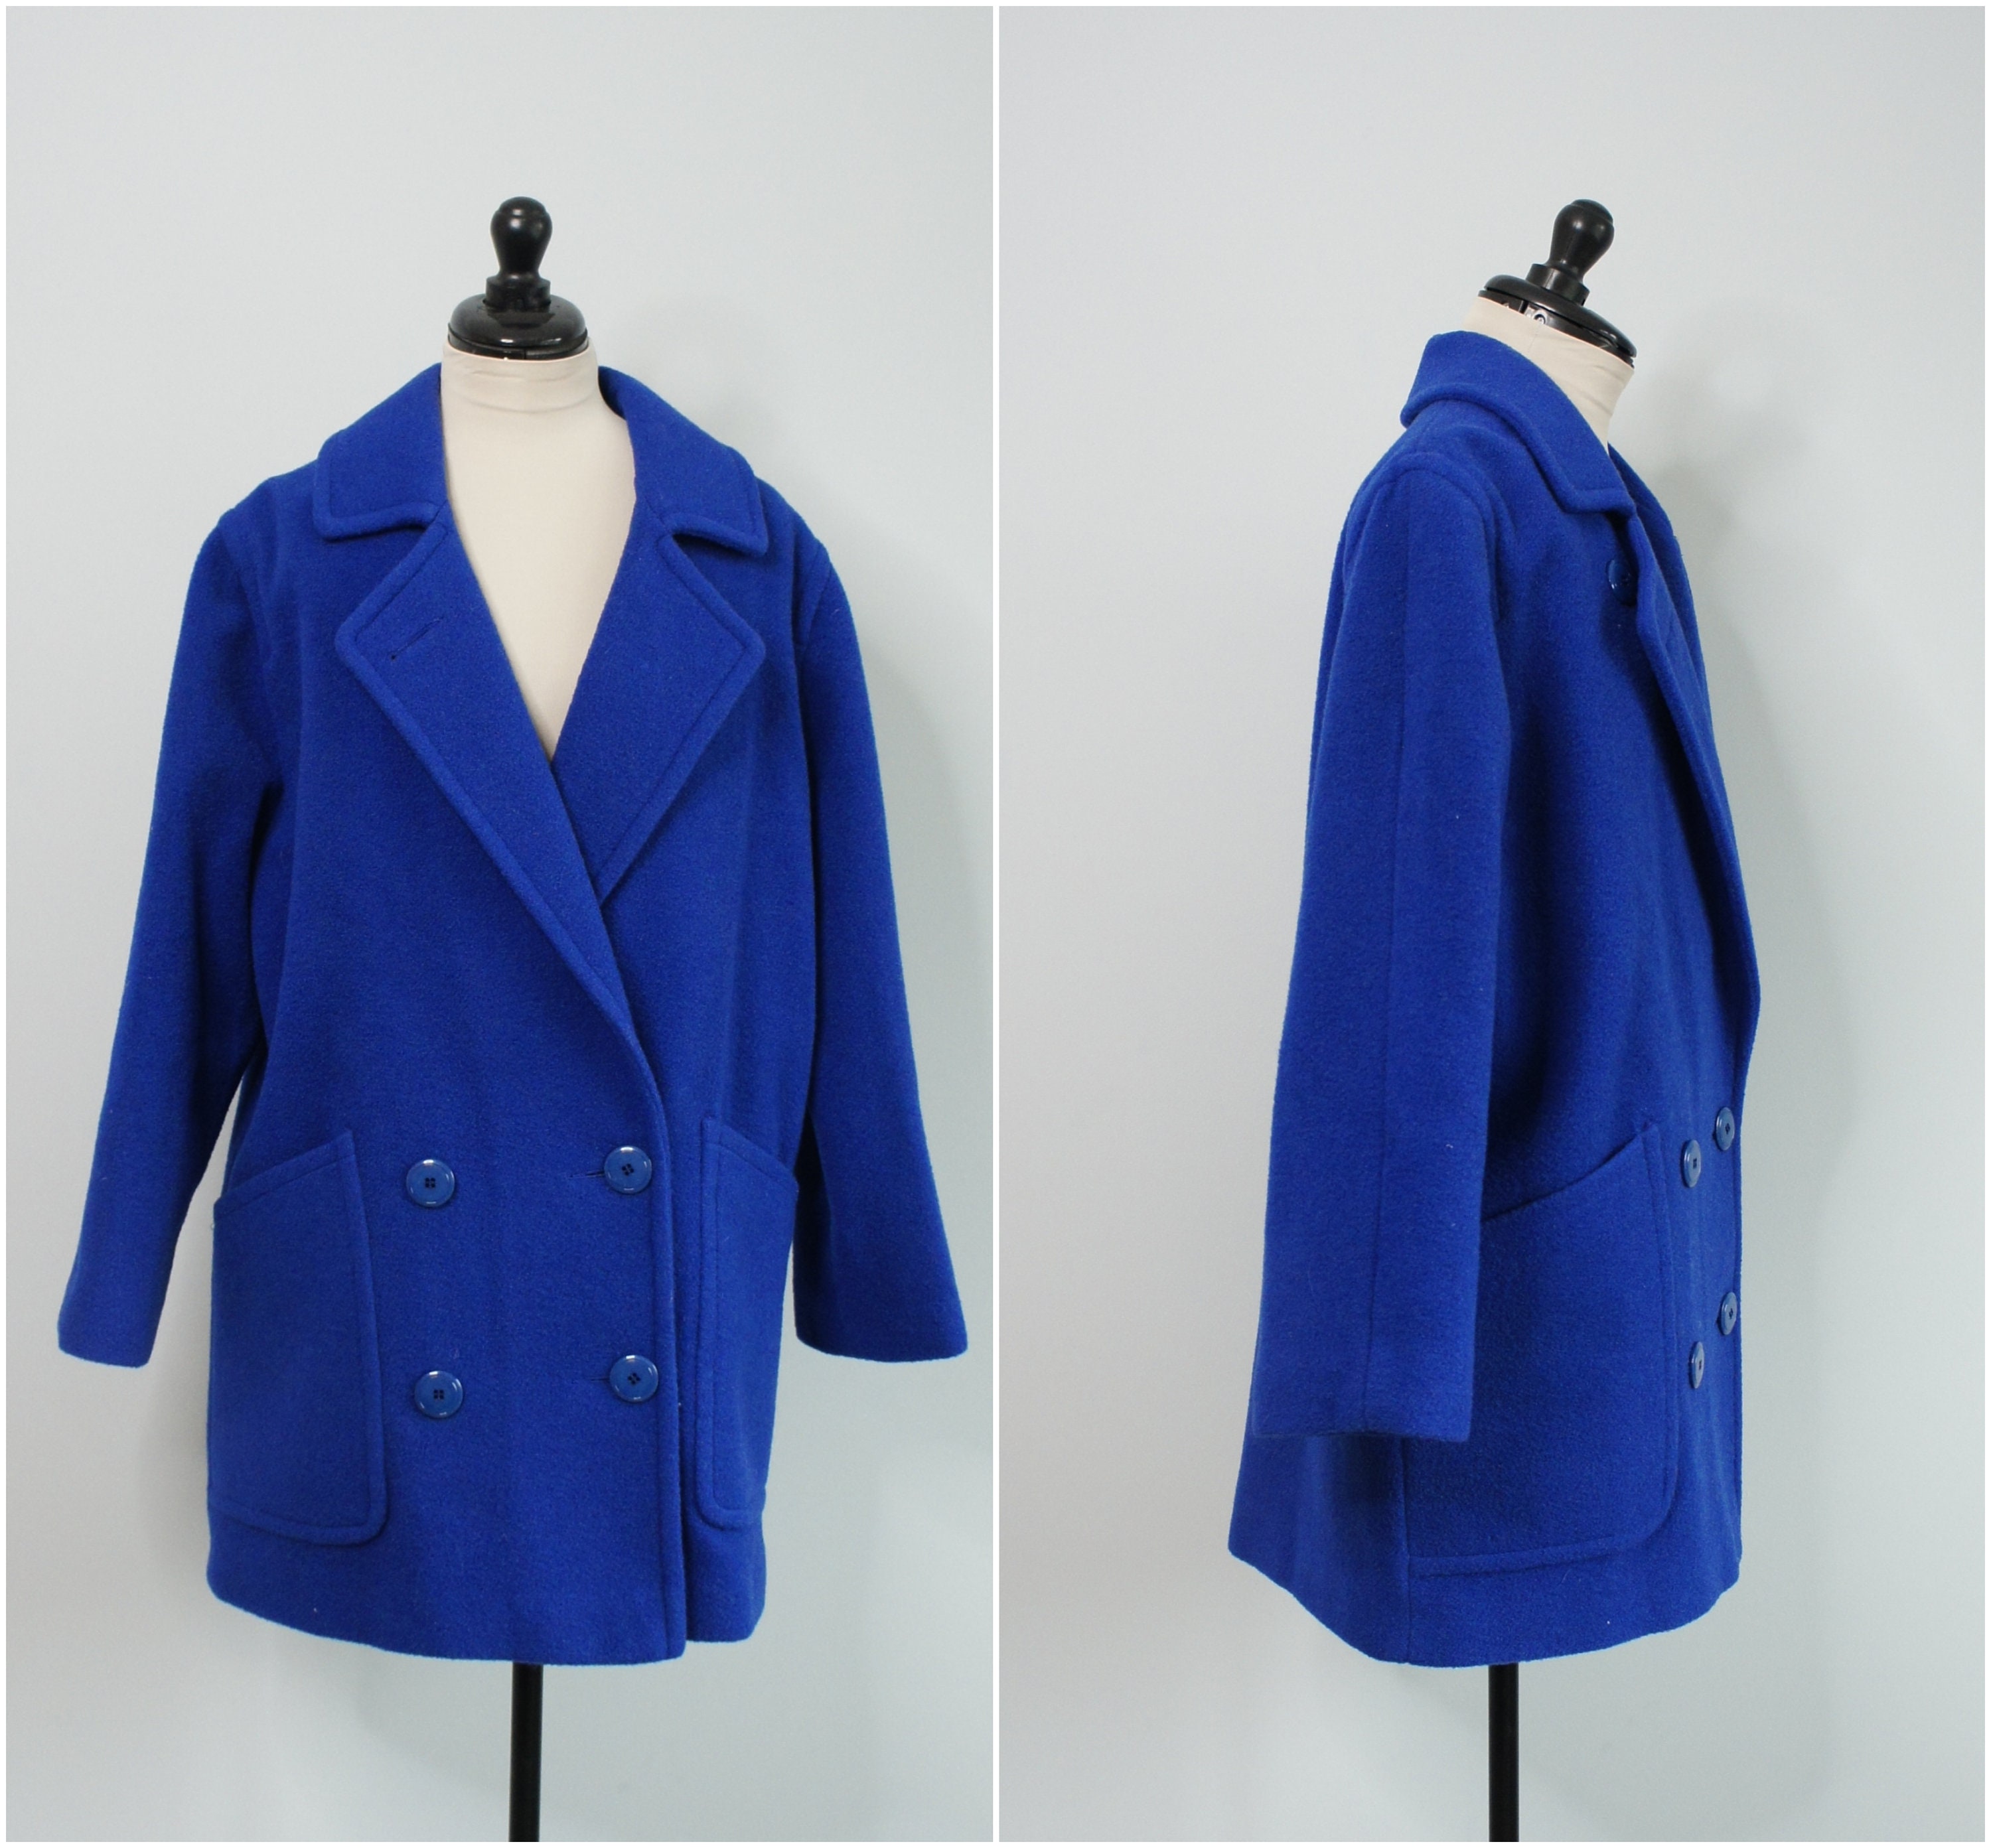 Midi Wool Coat, Wool Coat, Womens Winter Coats, Dress Coat, Navy